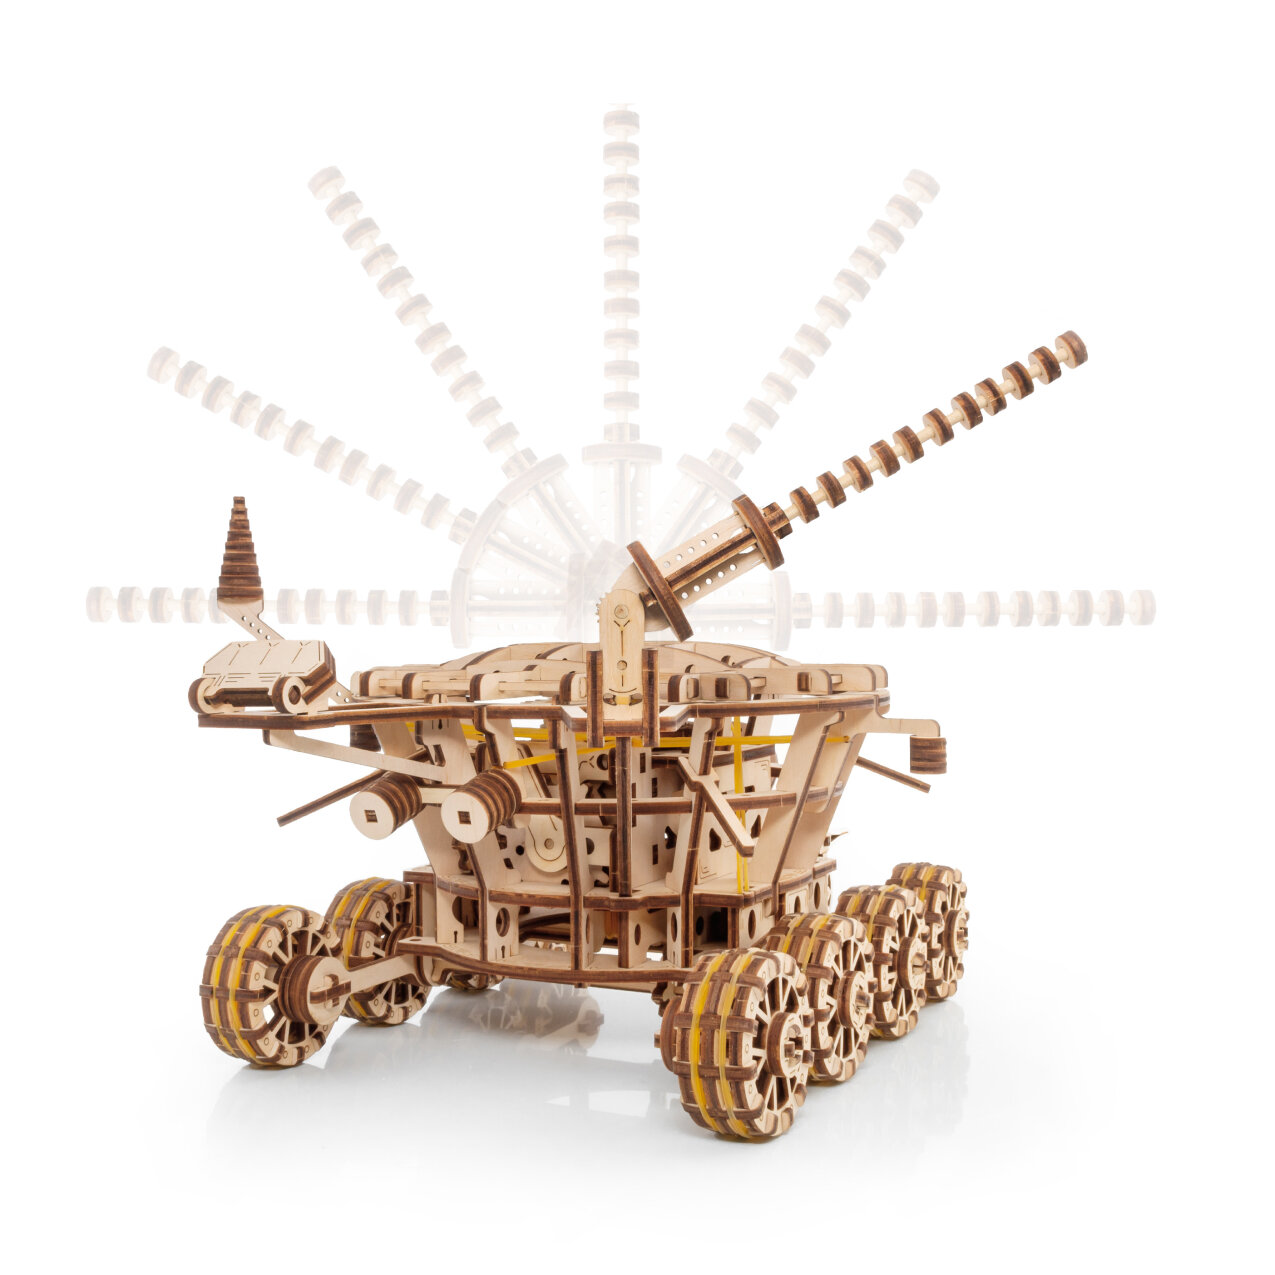 Механический 3D конструктор из дерева "Луноход" Eco Wood Art - фото №4